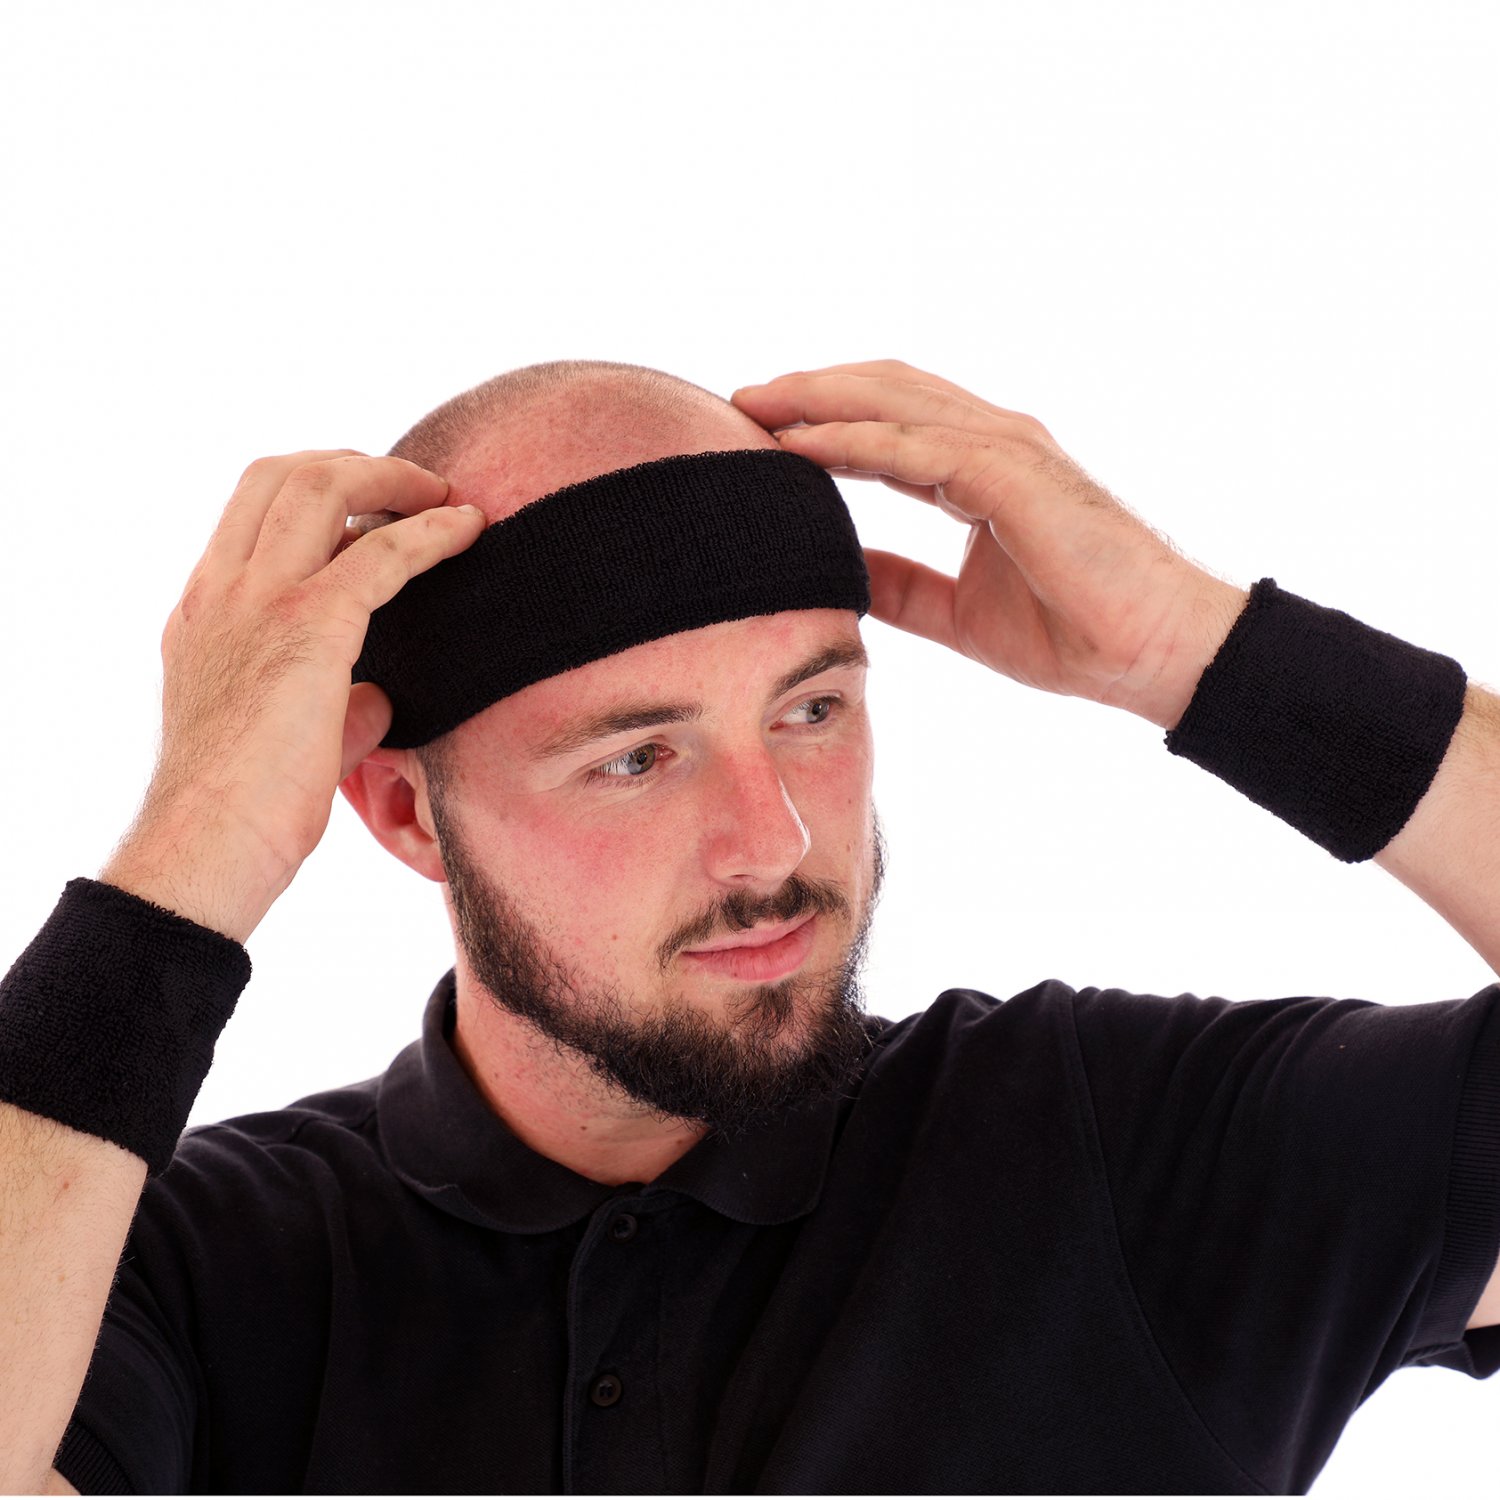 Black Sport Gym Fitness Exercise Headband & Sweatband Set for He